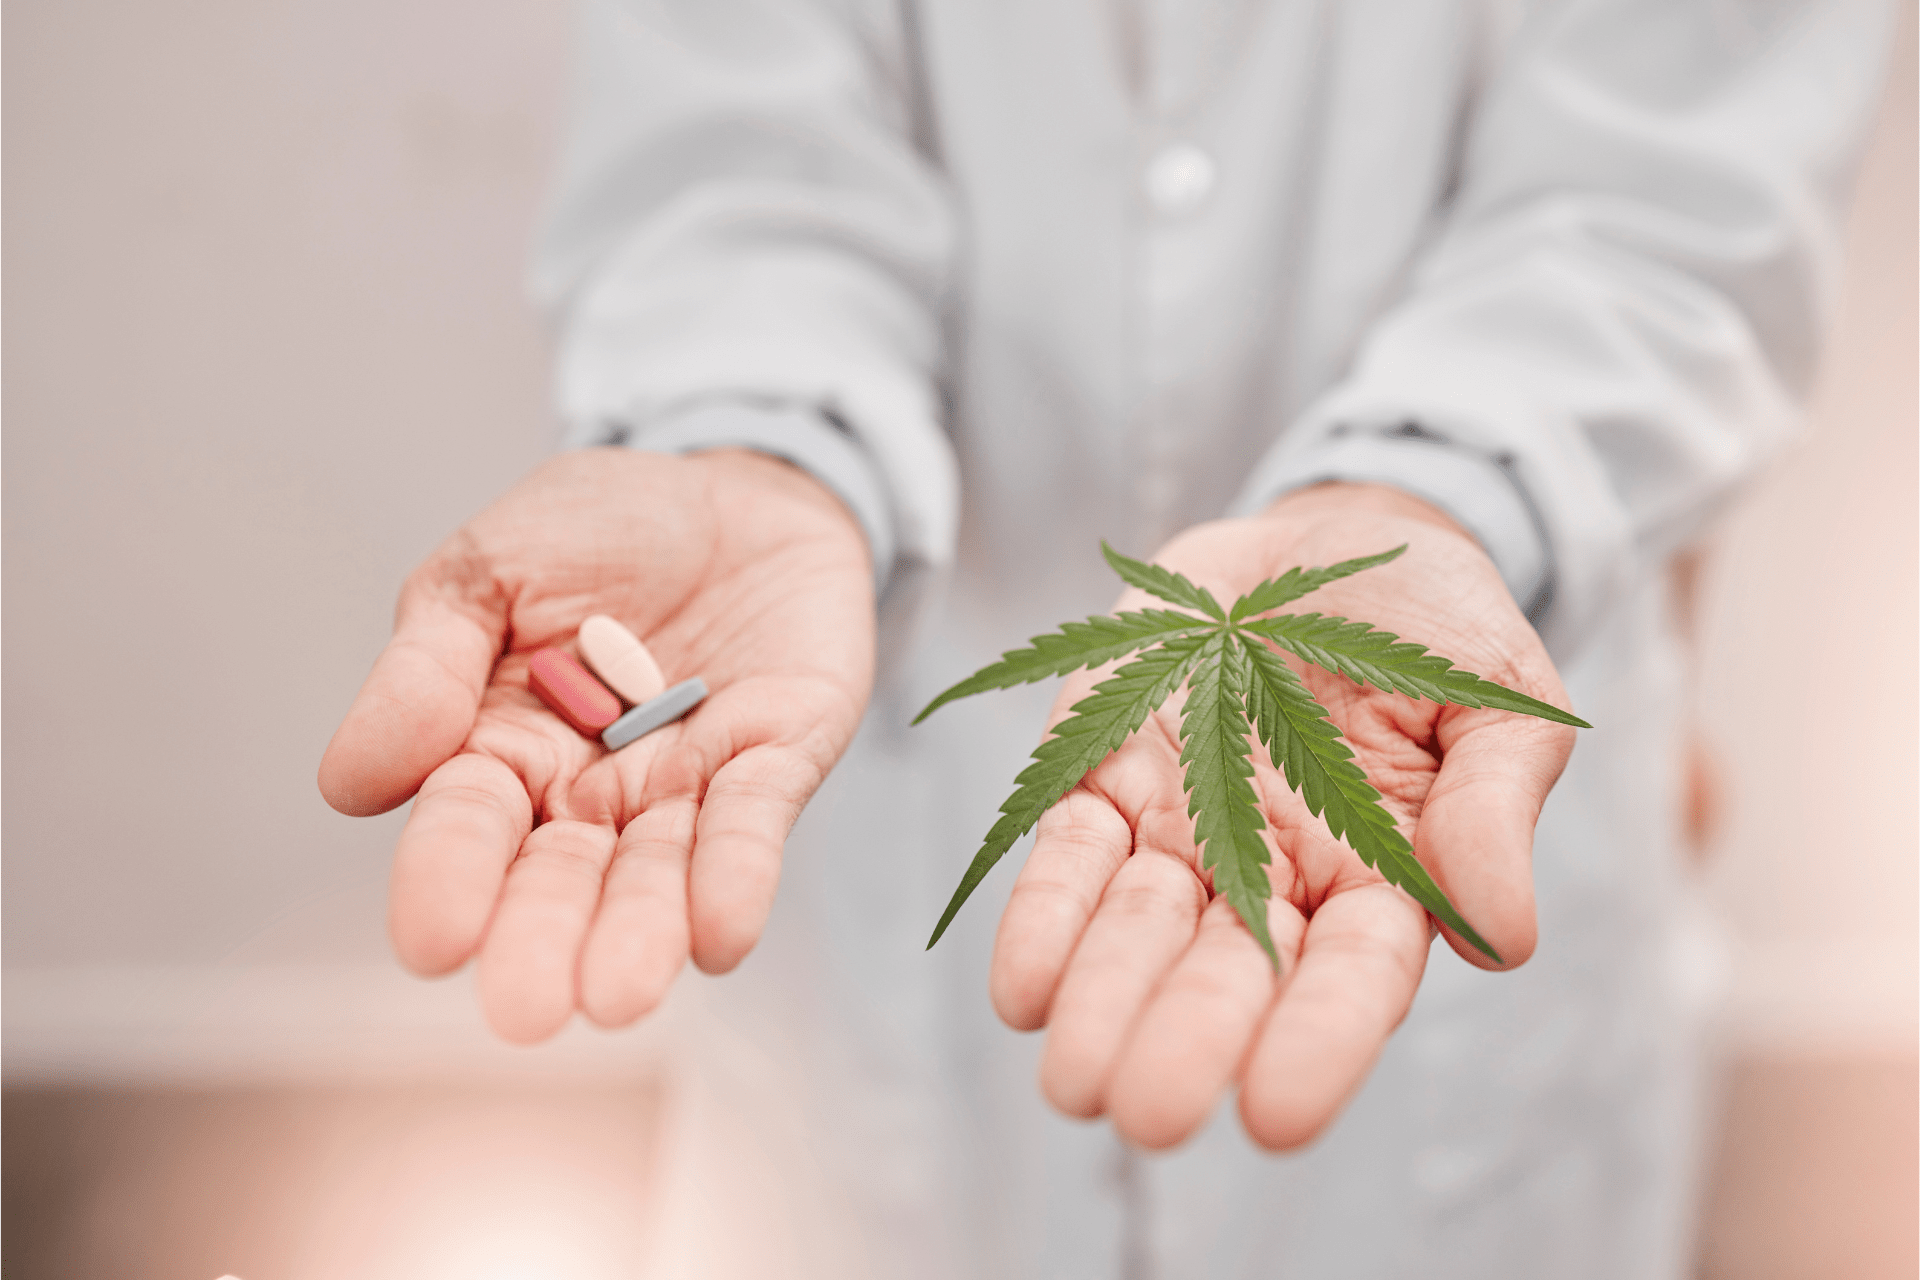 has medical marijuana impacted the opioid epidemic